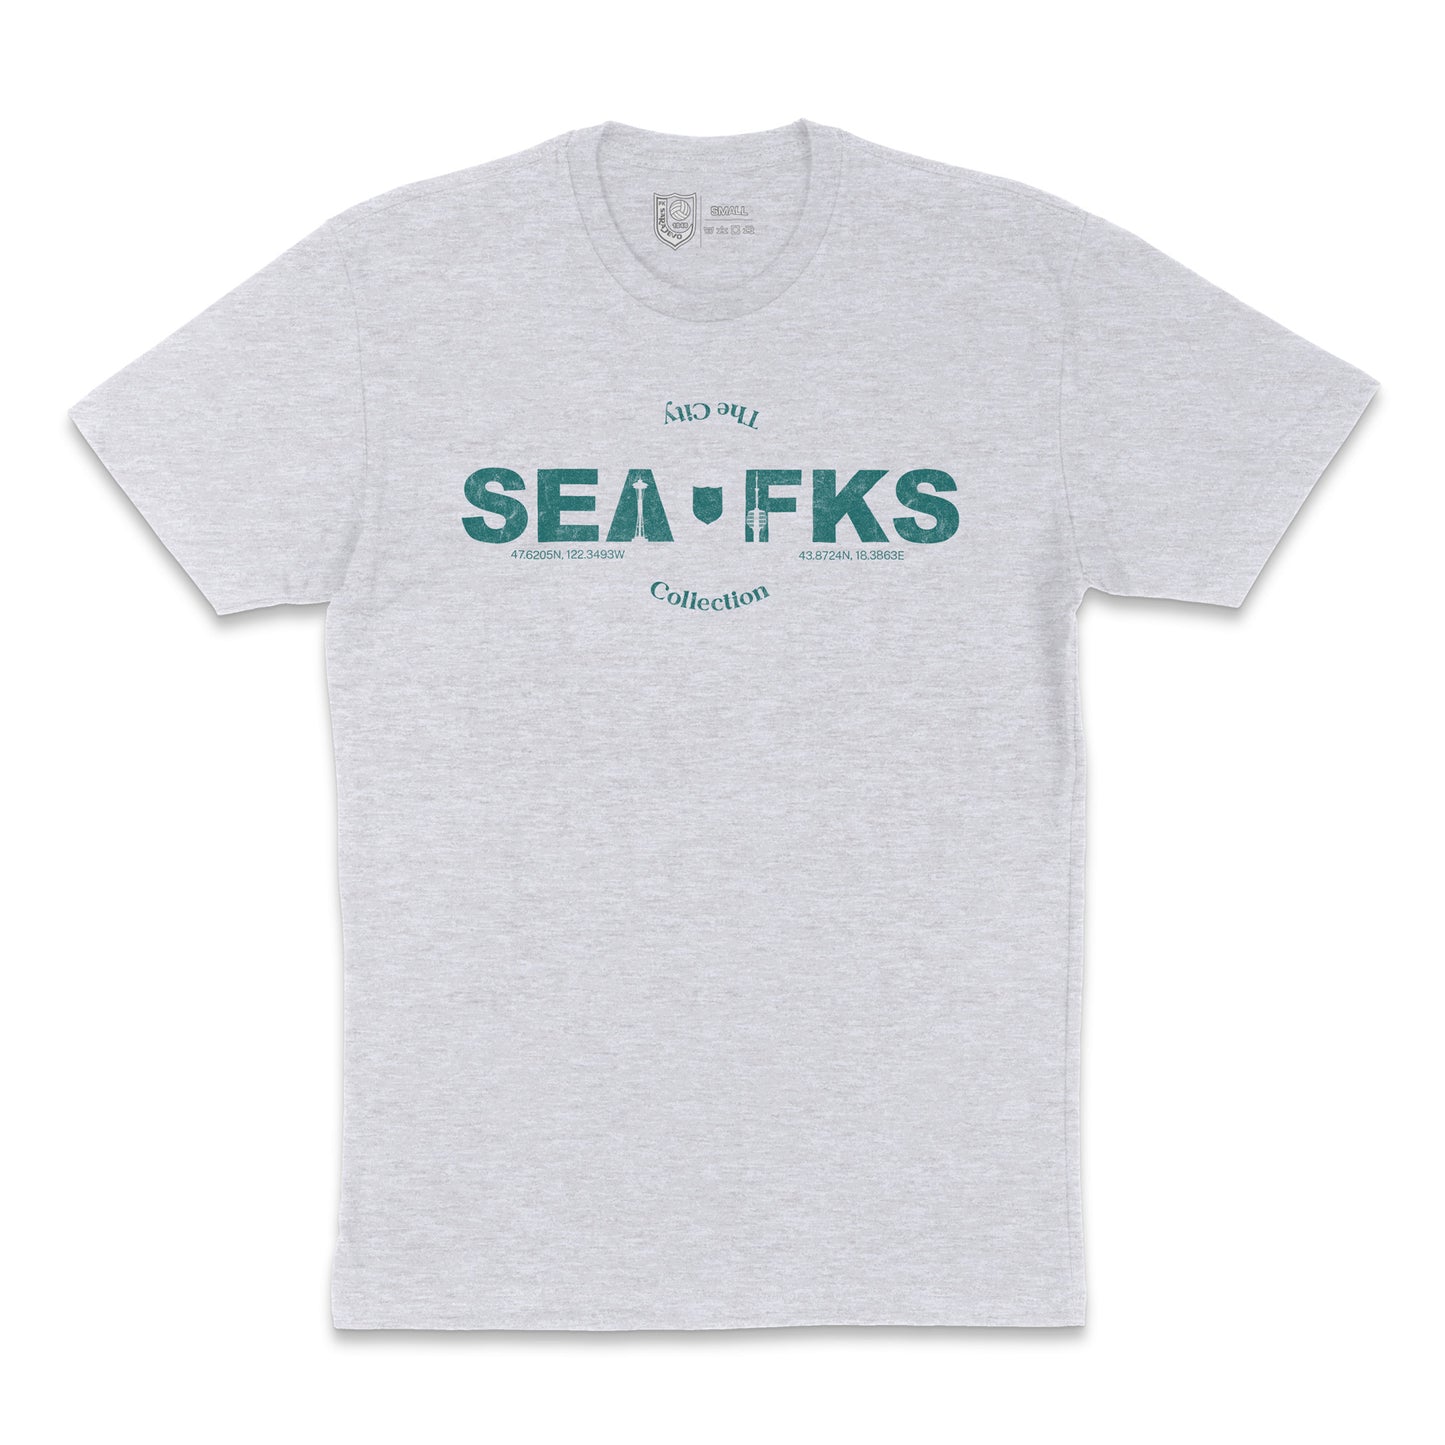 SEA x FKS City Collection Tee